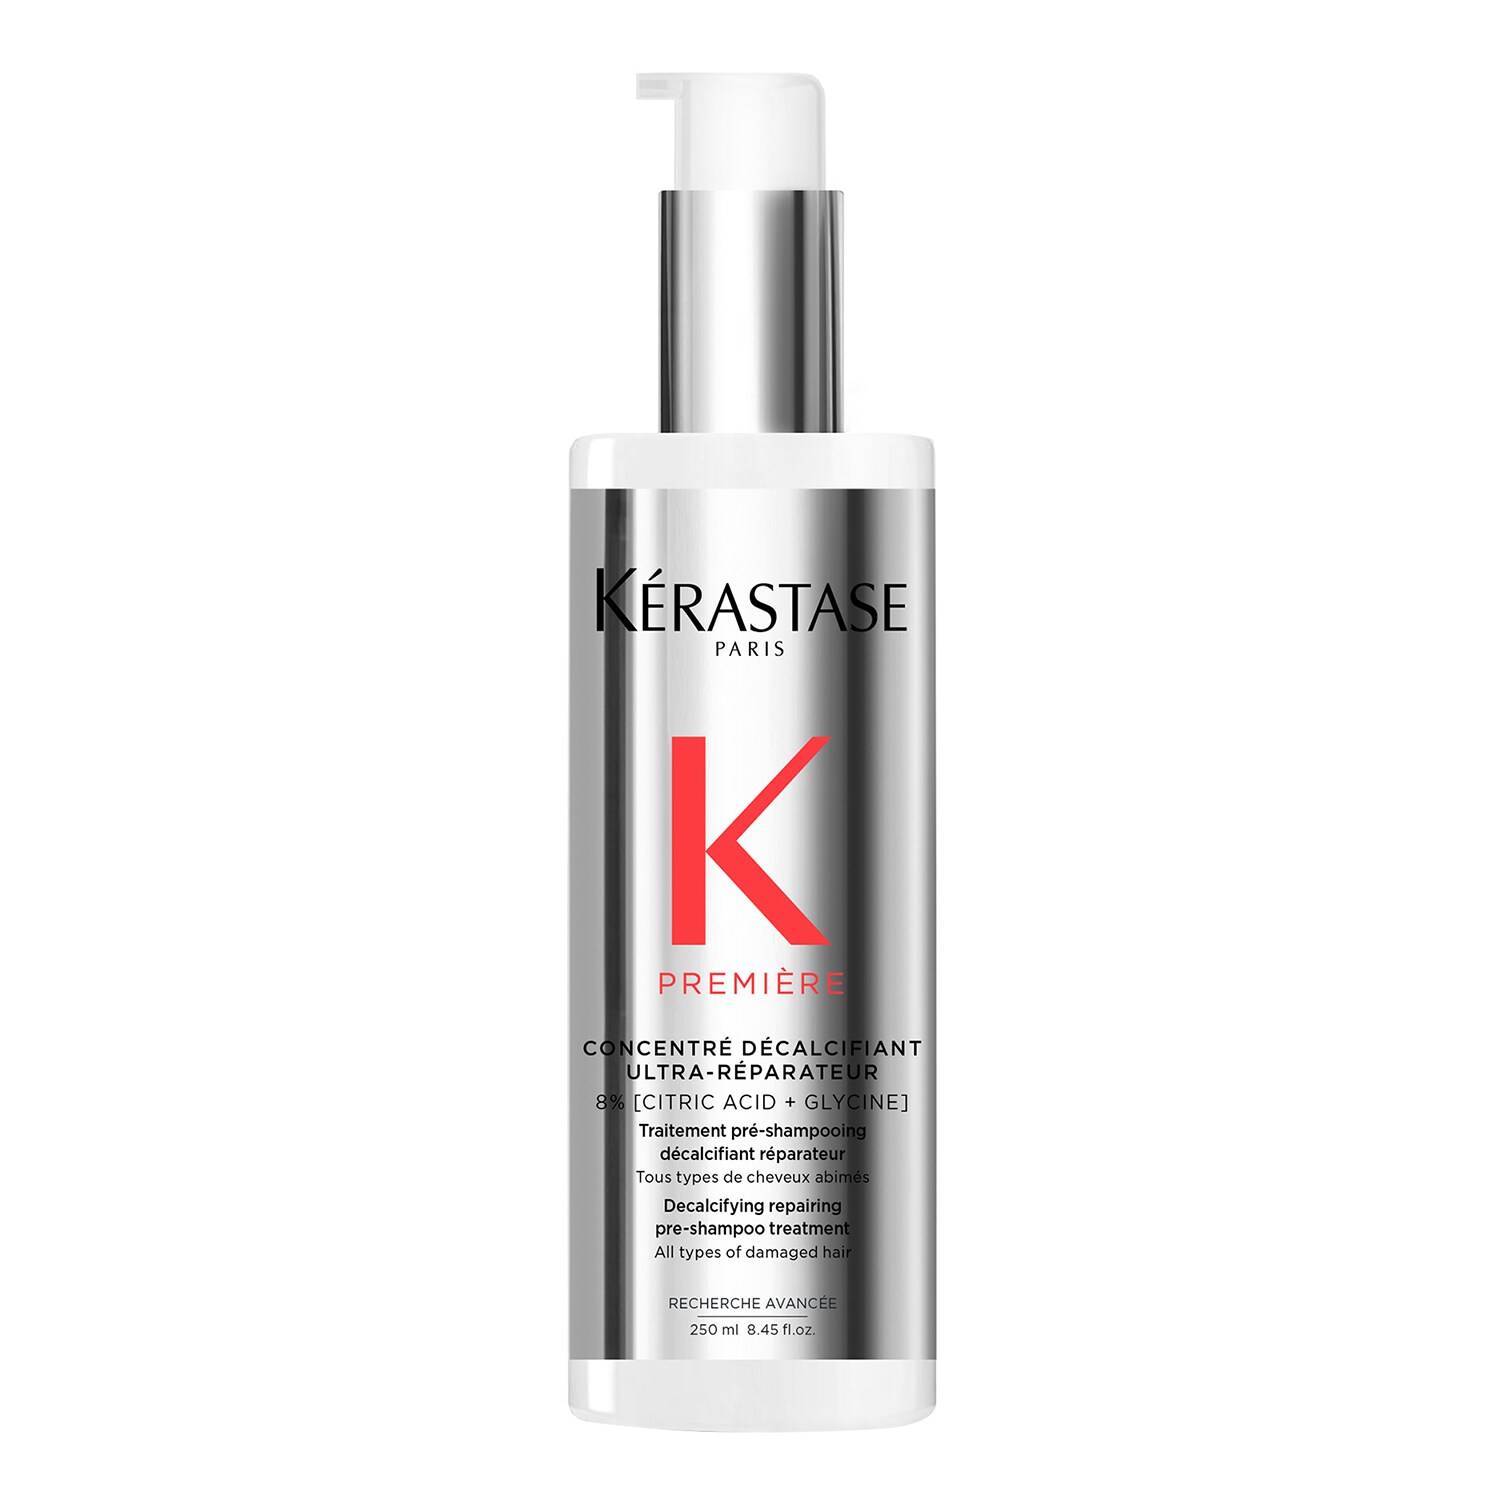 Kerastase Premiere Decalcifying Repairing Pre-Shampoo Treatment 250Ml